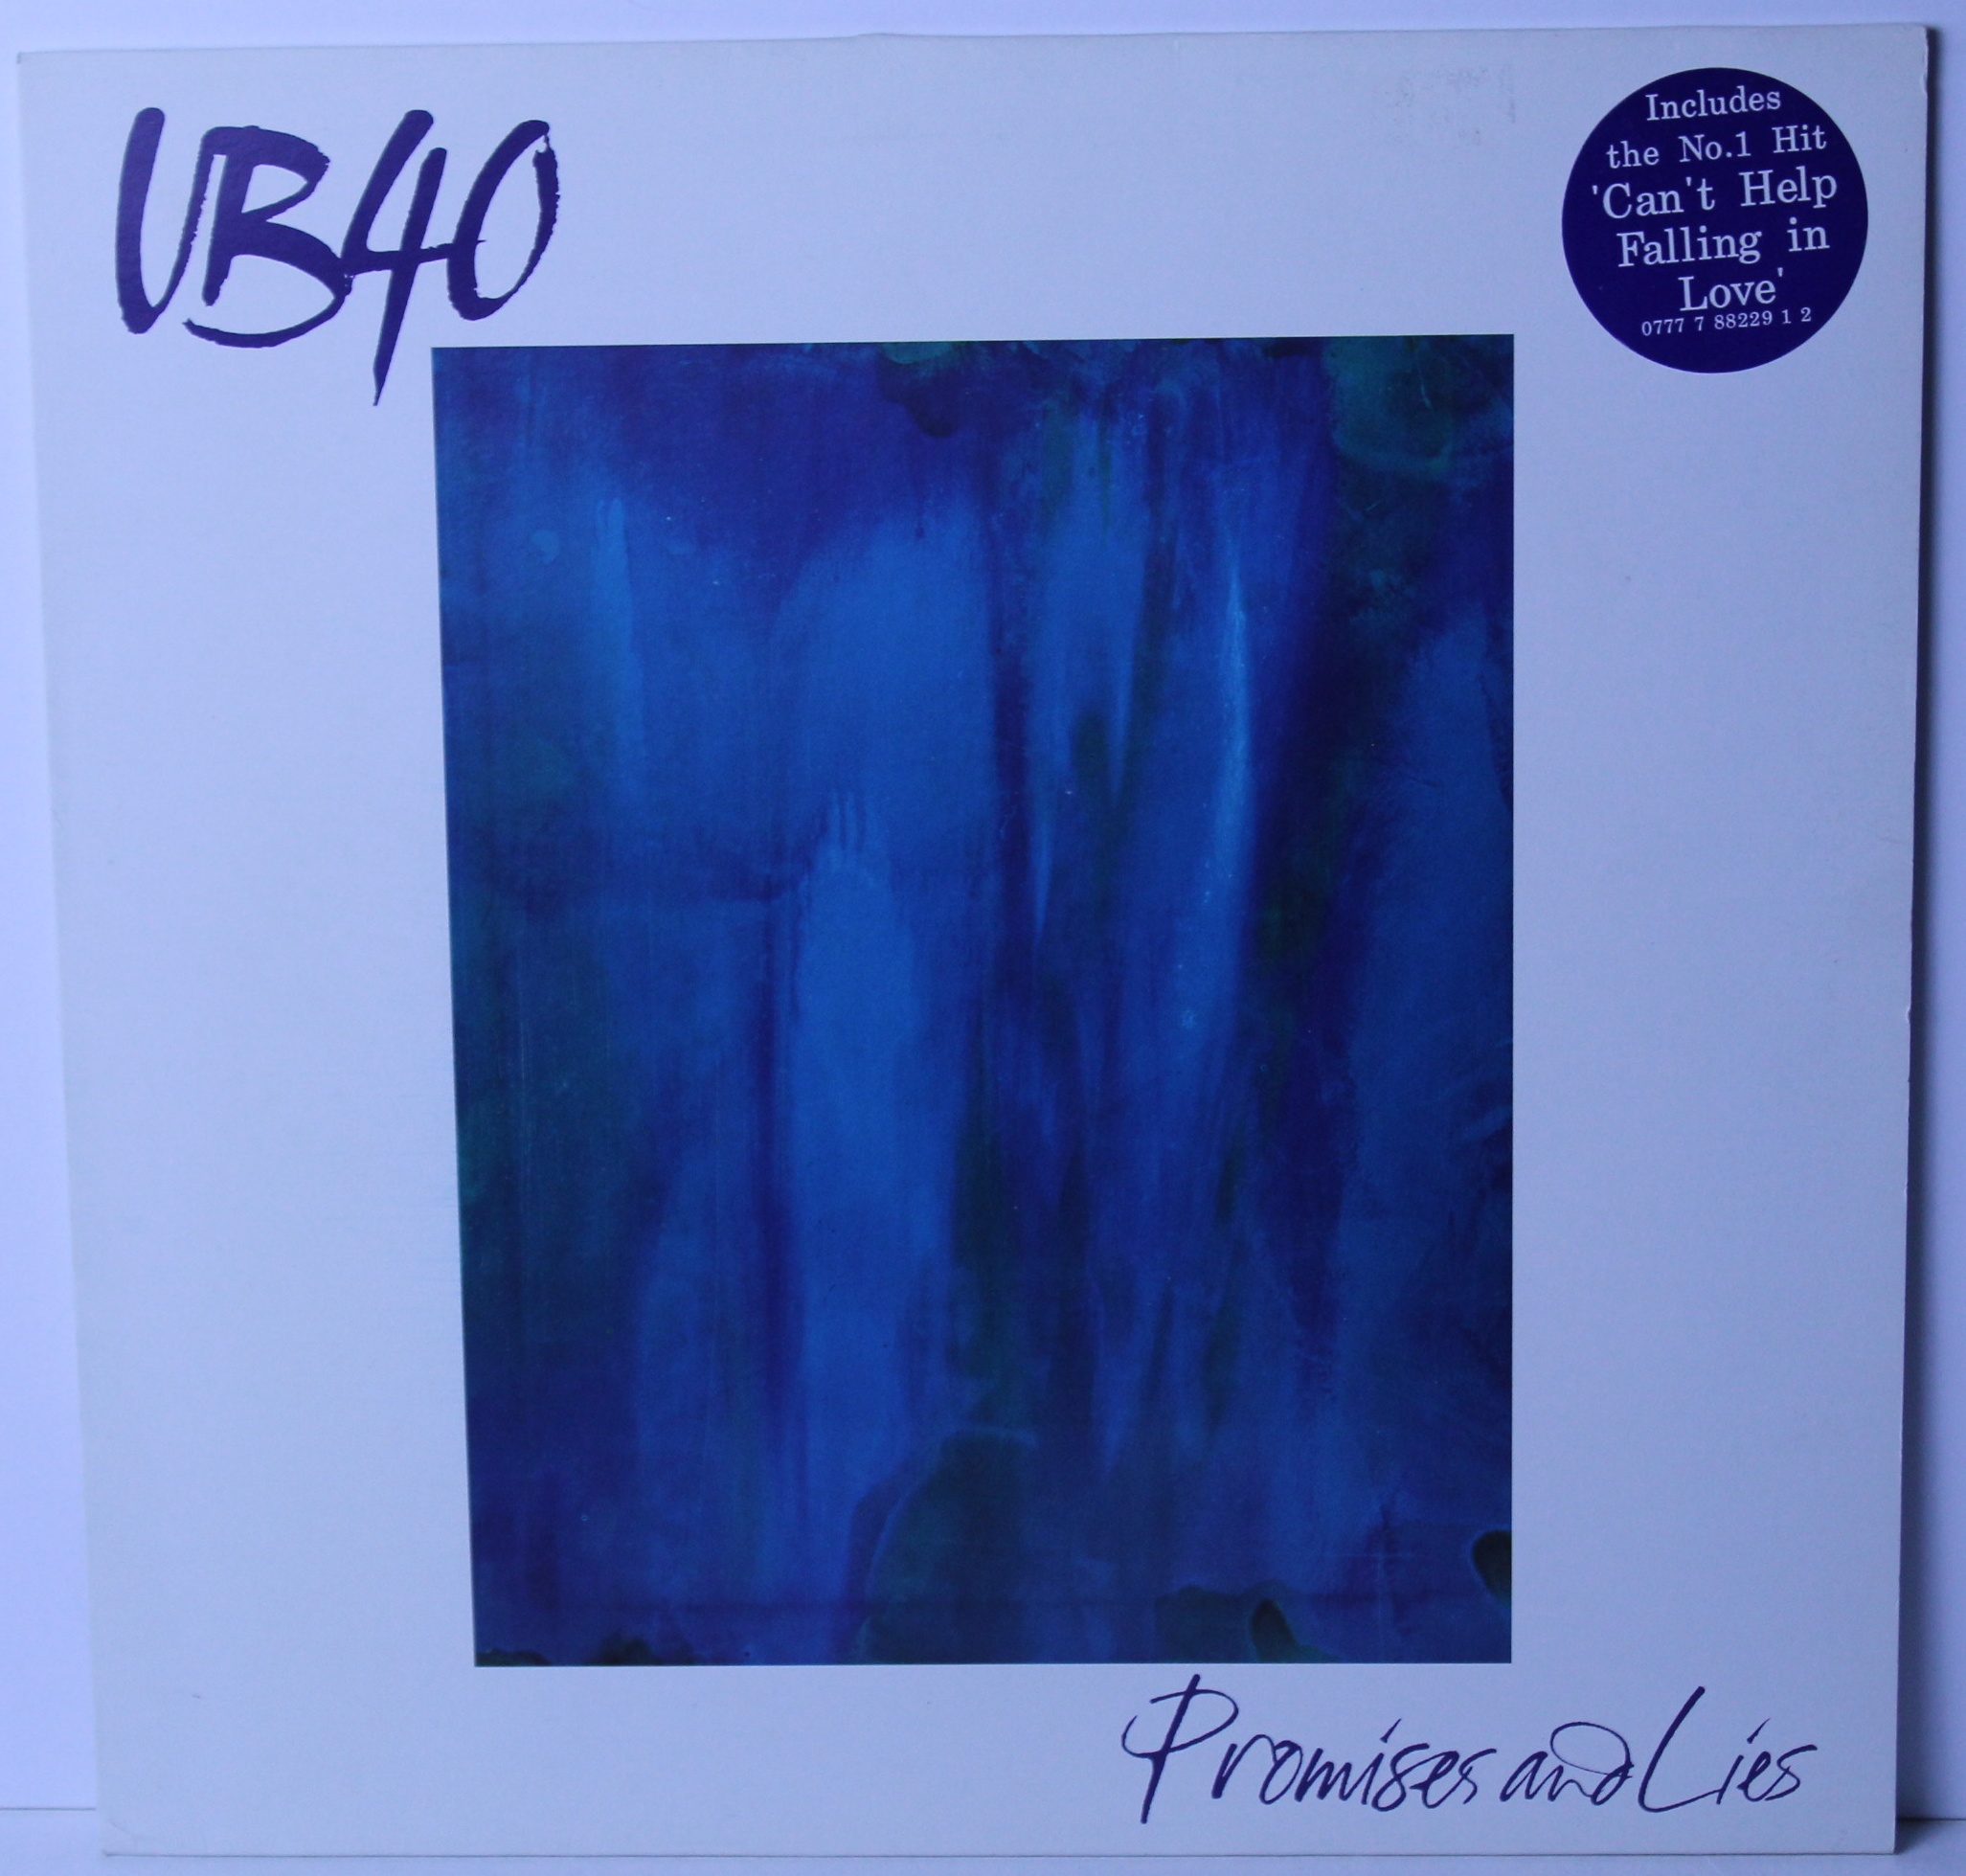 UB40 - Labour of Love II LP DEP14 UK 1989 / Kingston Town DEP3512 Australia 1990 / UB40 LP DEP14 - Image 2 of 5